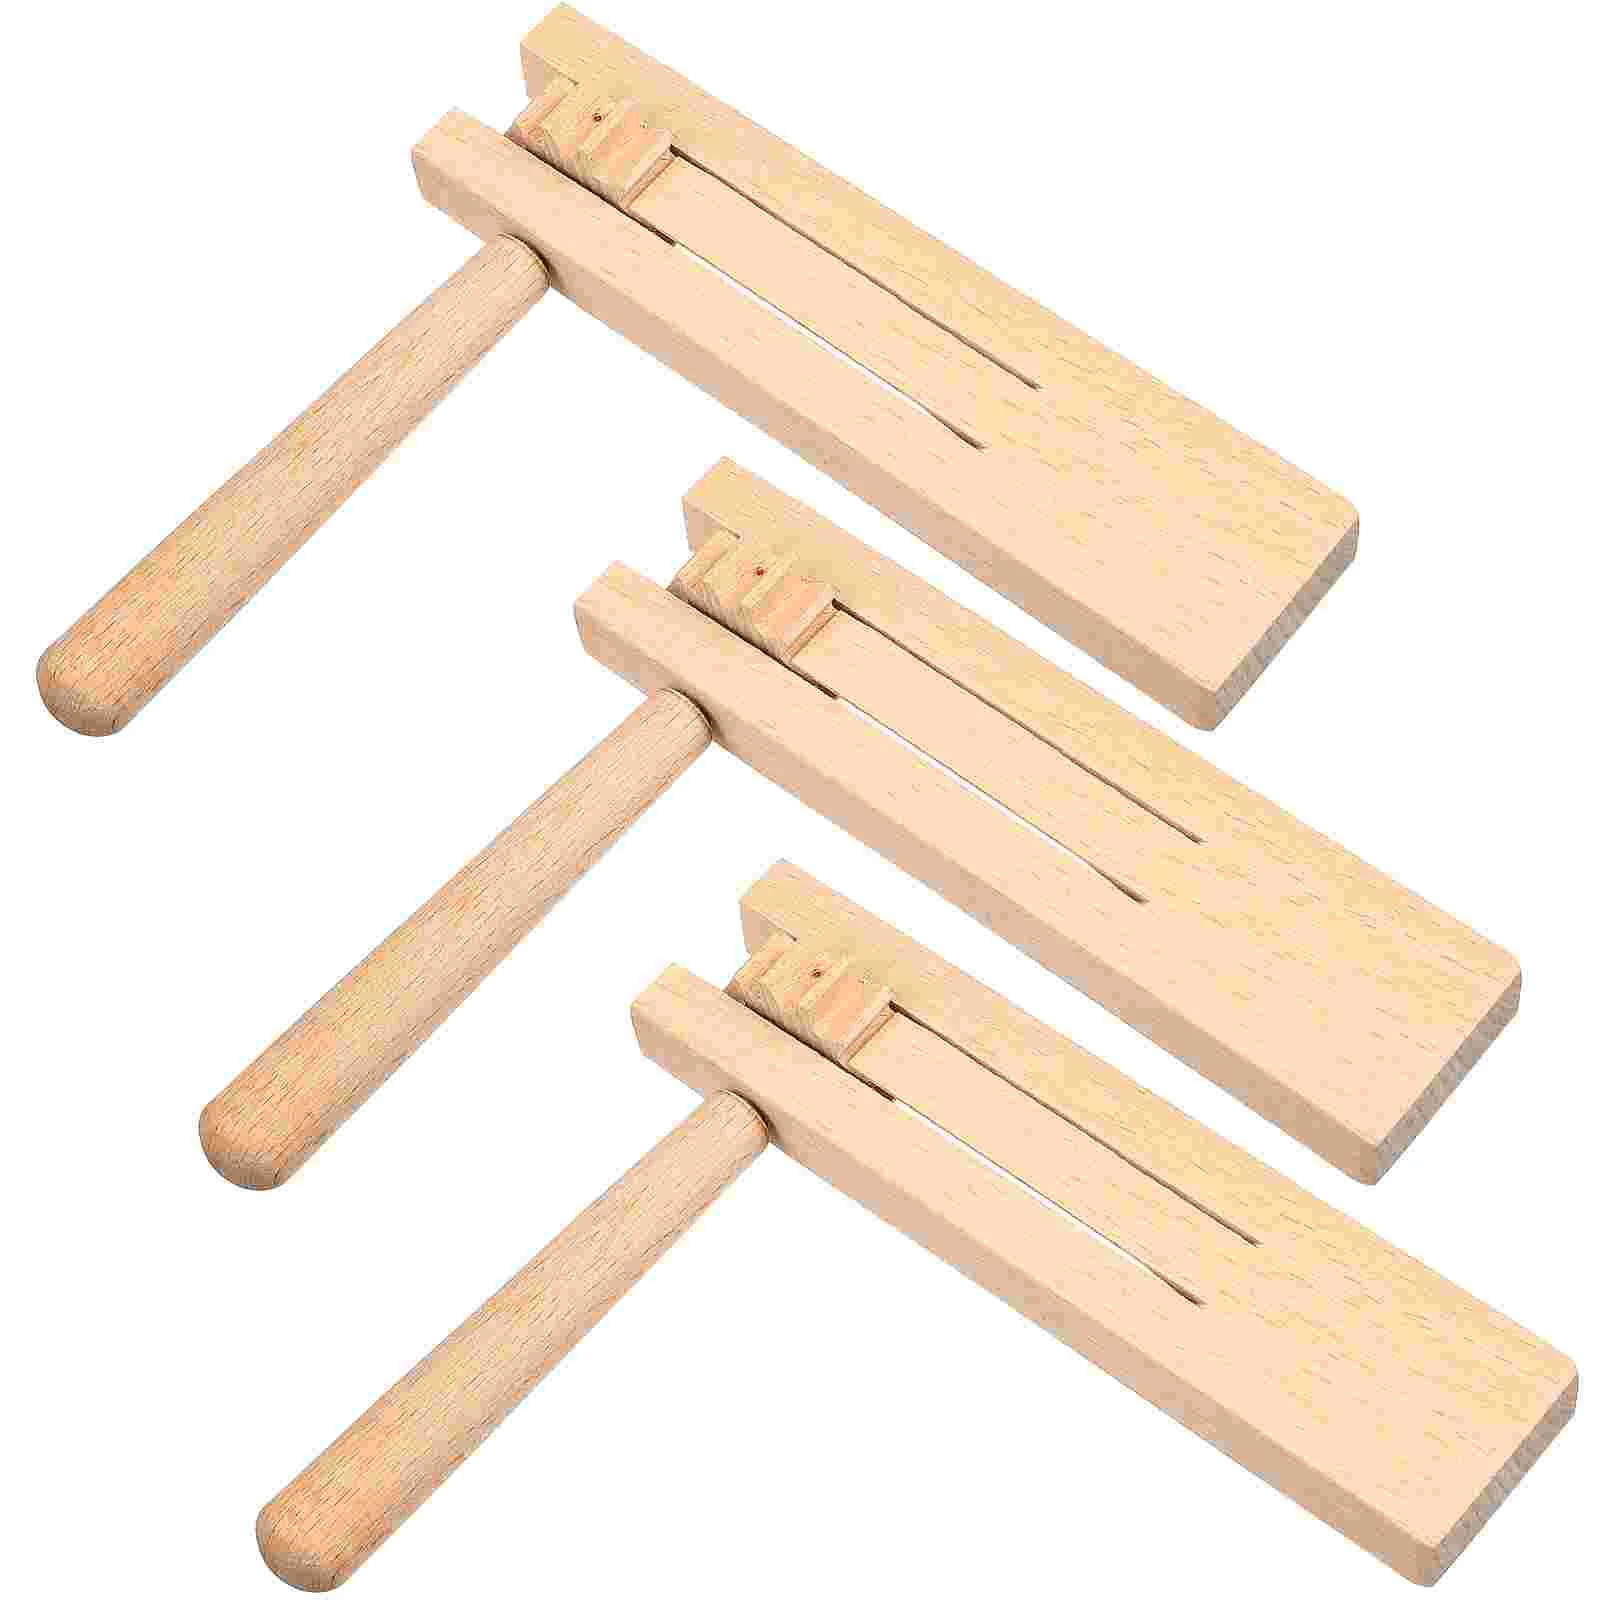 

Orff Instrument Wood Ratchet Noise Maker Toys Matraca Kids Wooden Matracas Instruments Sound Musical